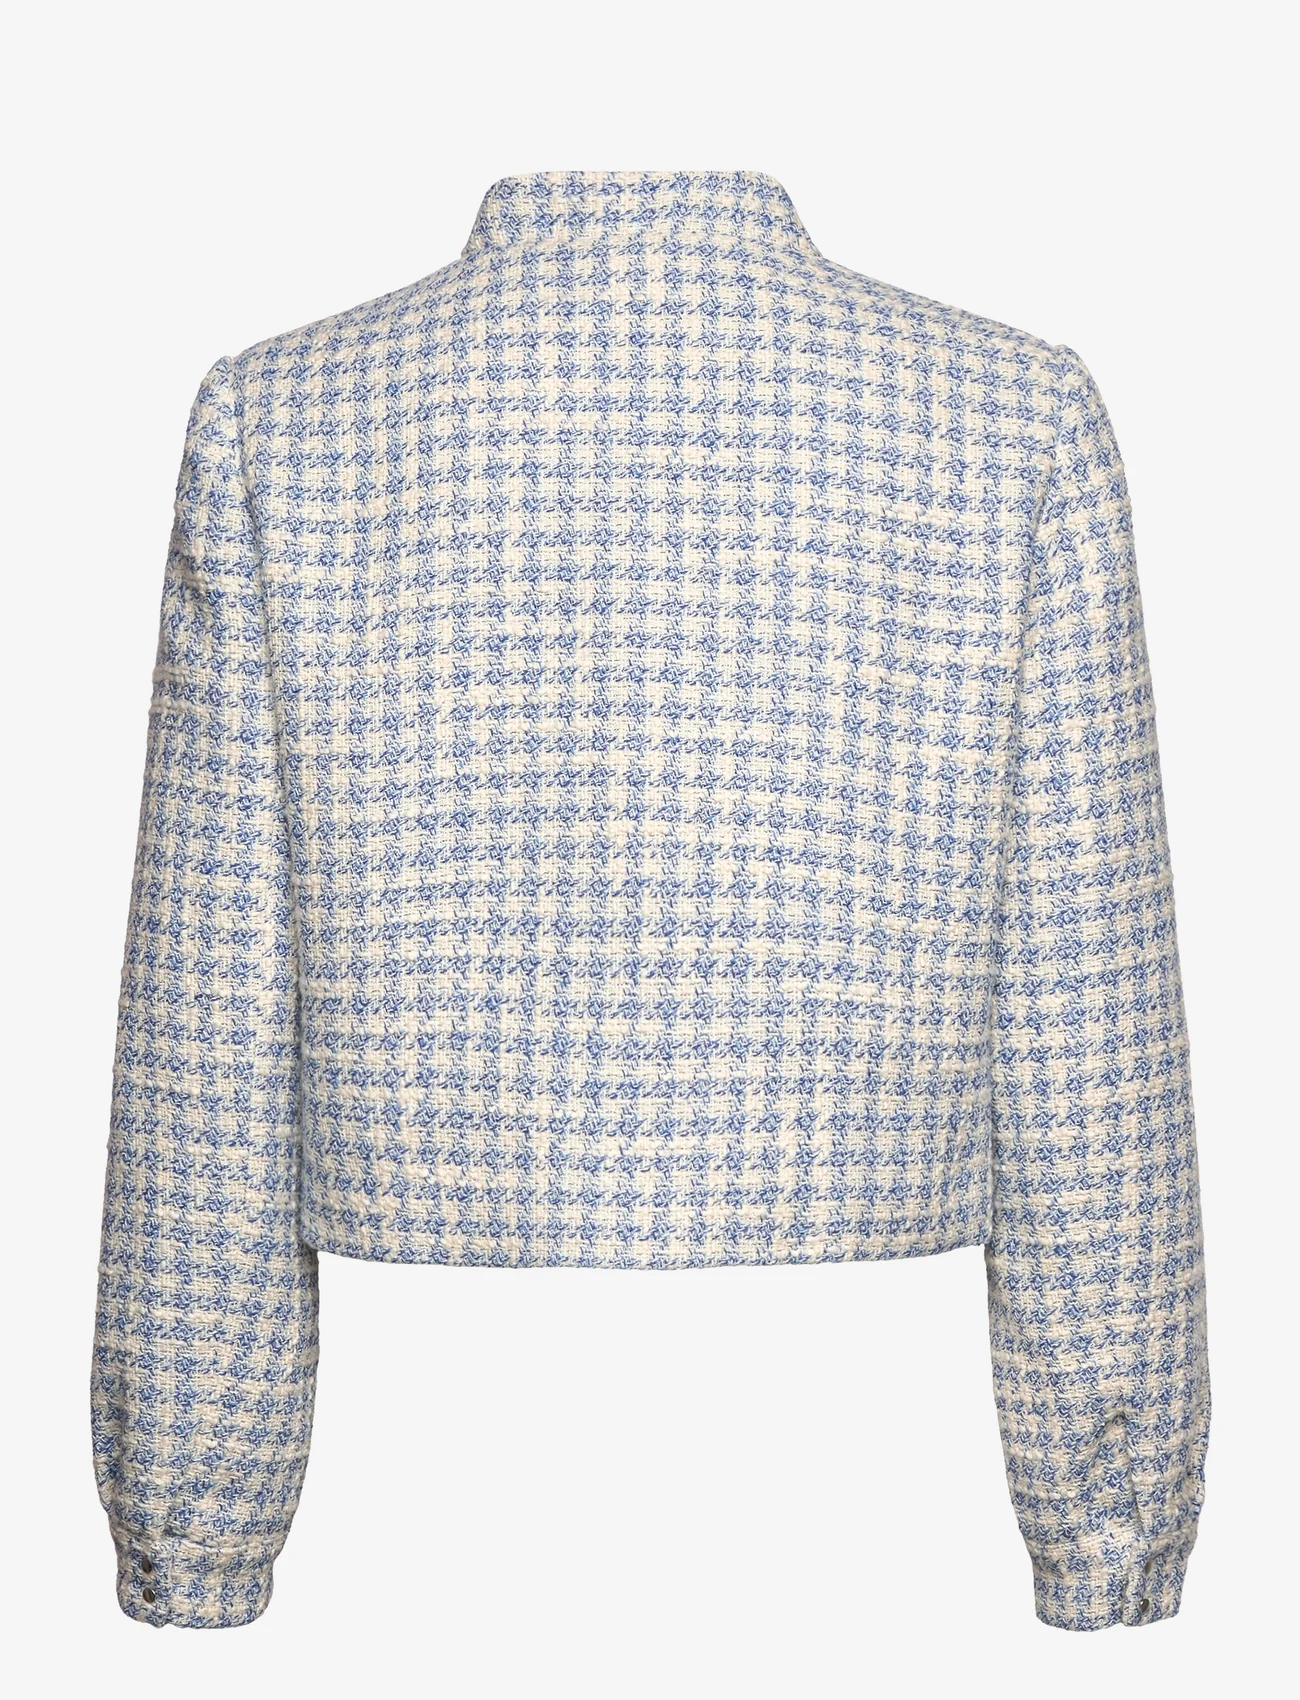 Mango - Tweed jacket with metal buttons - vårjackor - lt-pastel blue - 1